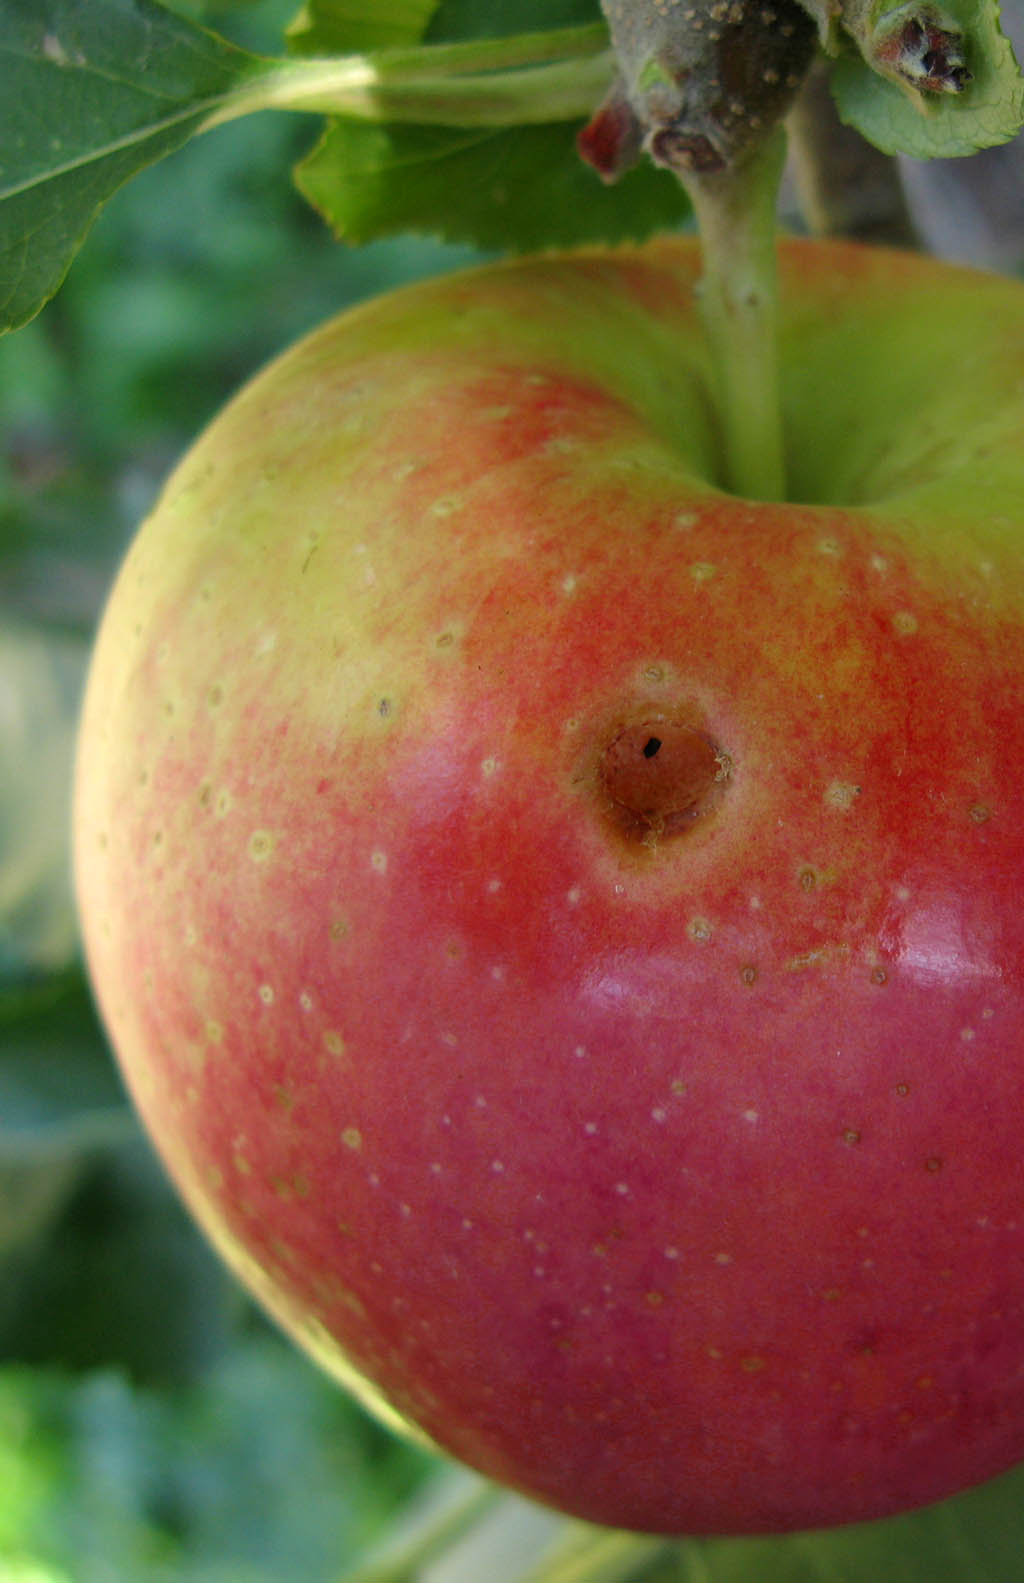 more-feeding-damage-on-apple